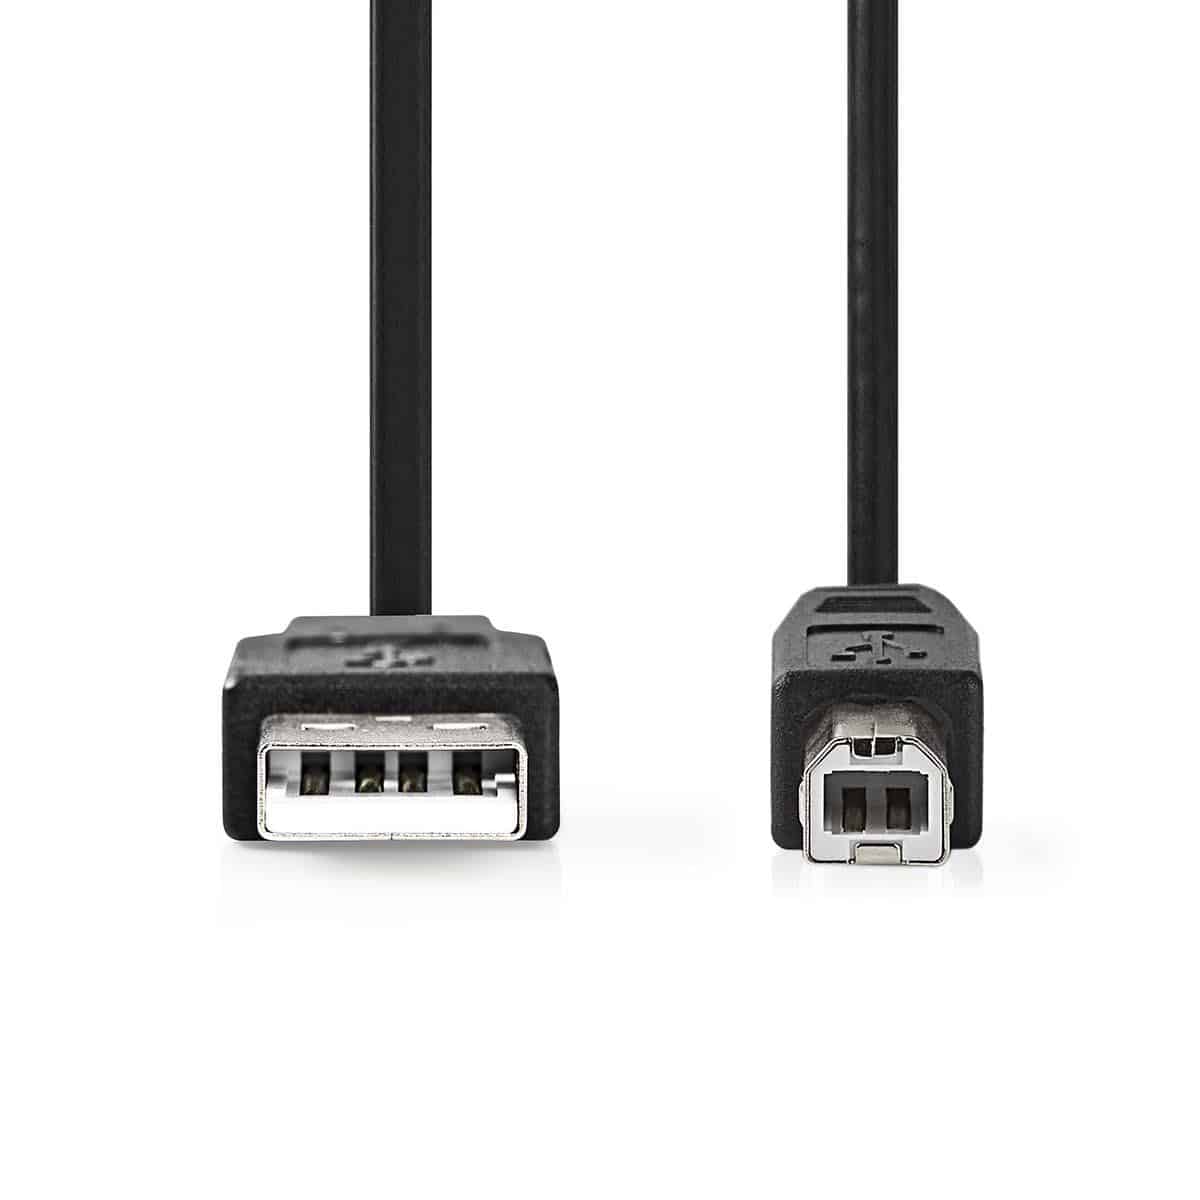 Nedis USB 2.0 Kabel USB-A Male to USB-B Male | 1 Meter